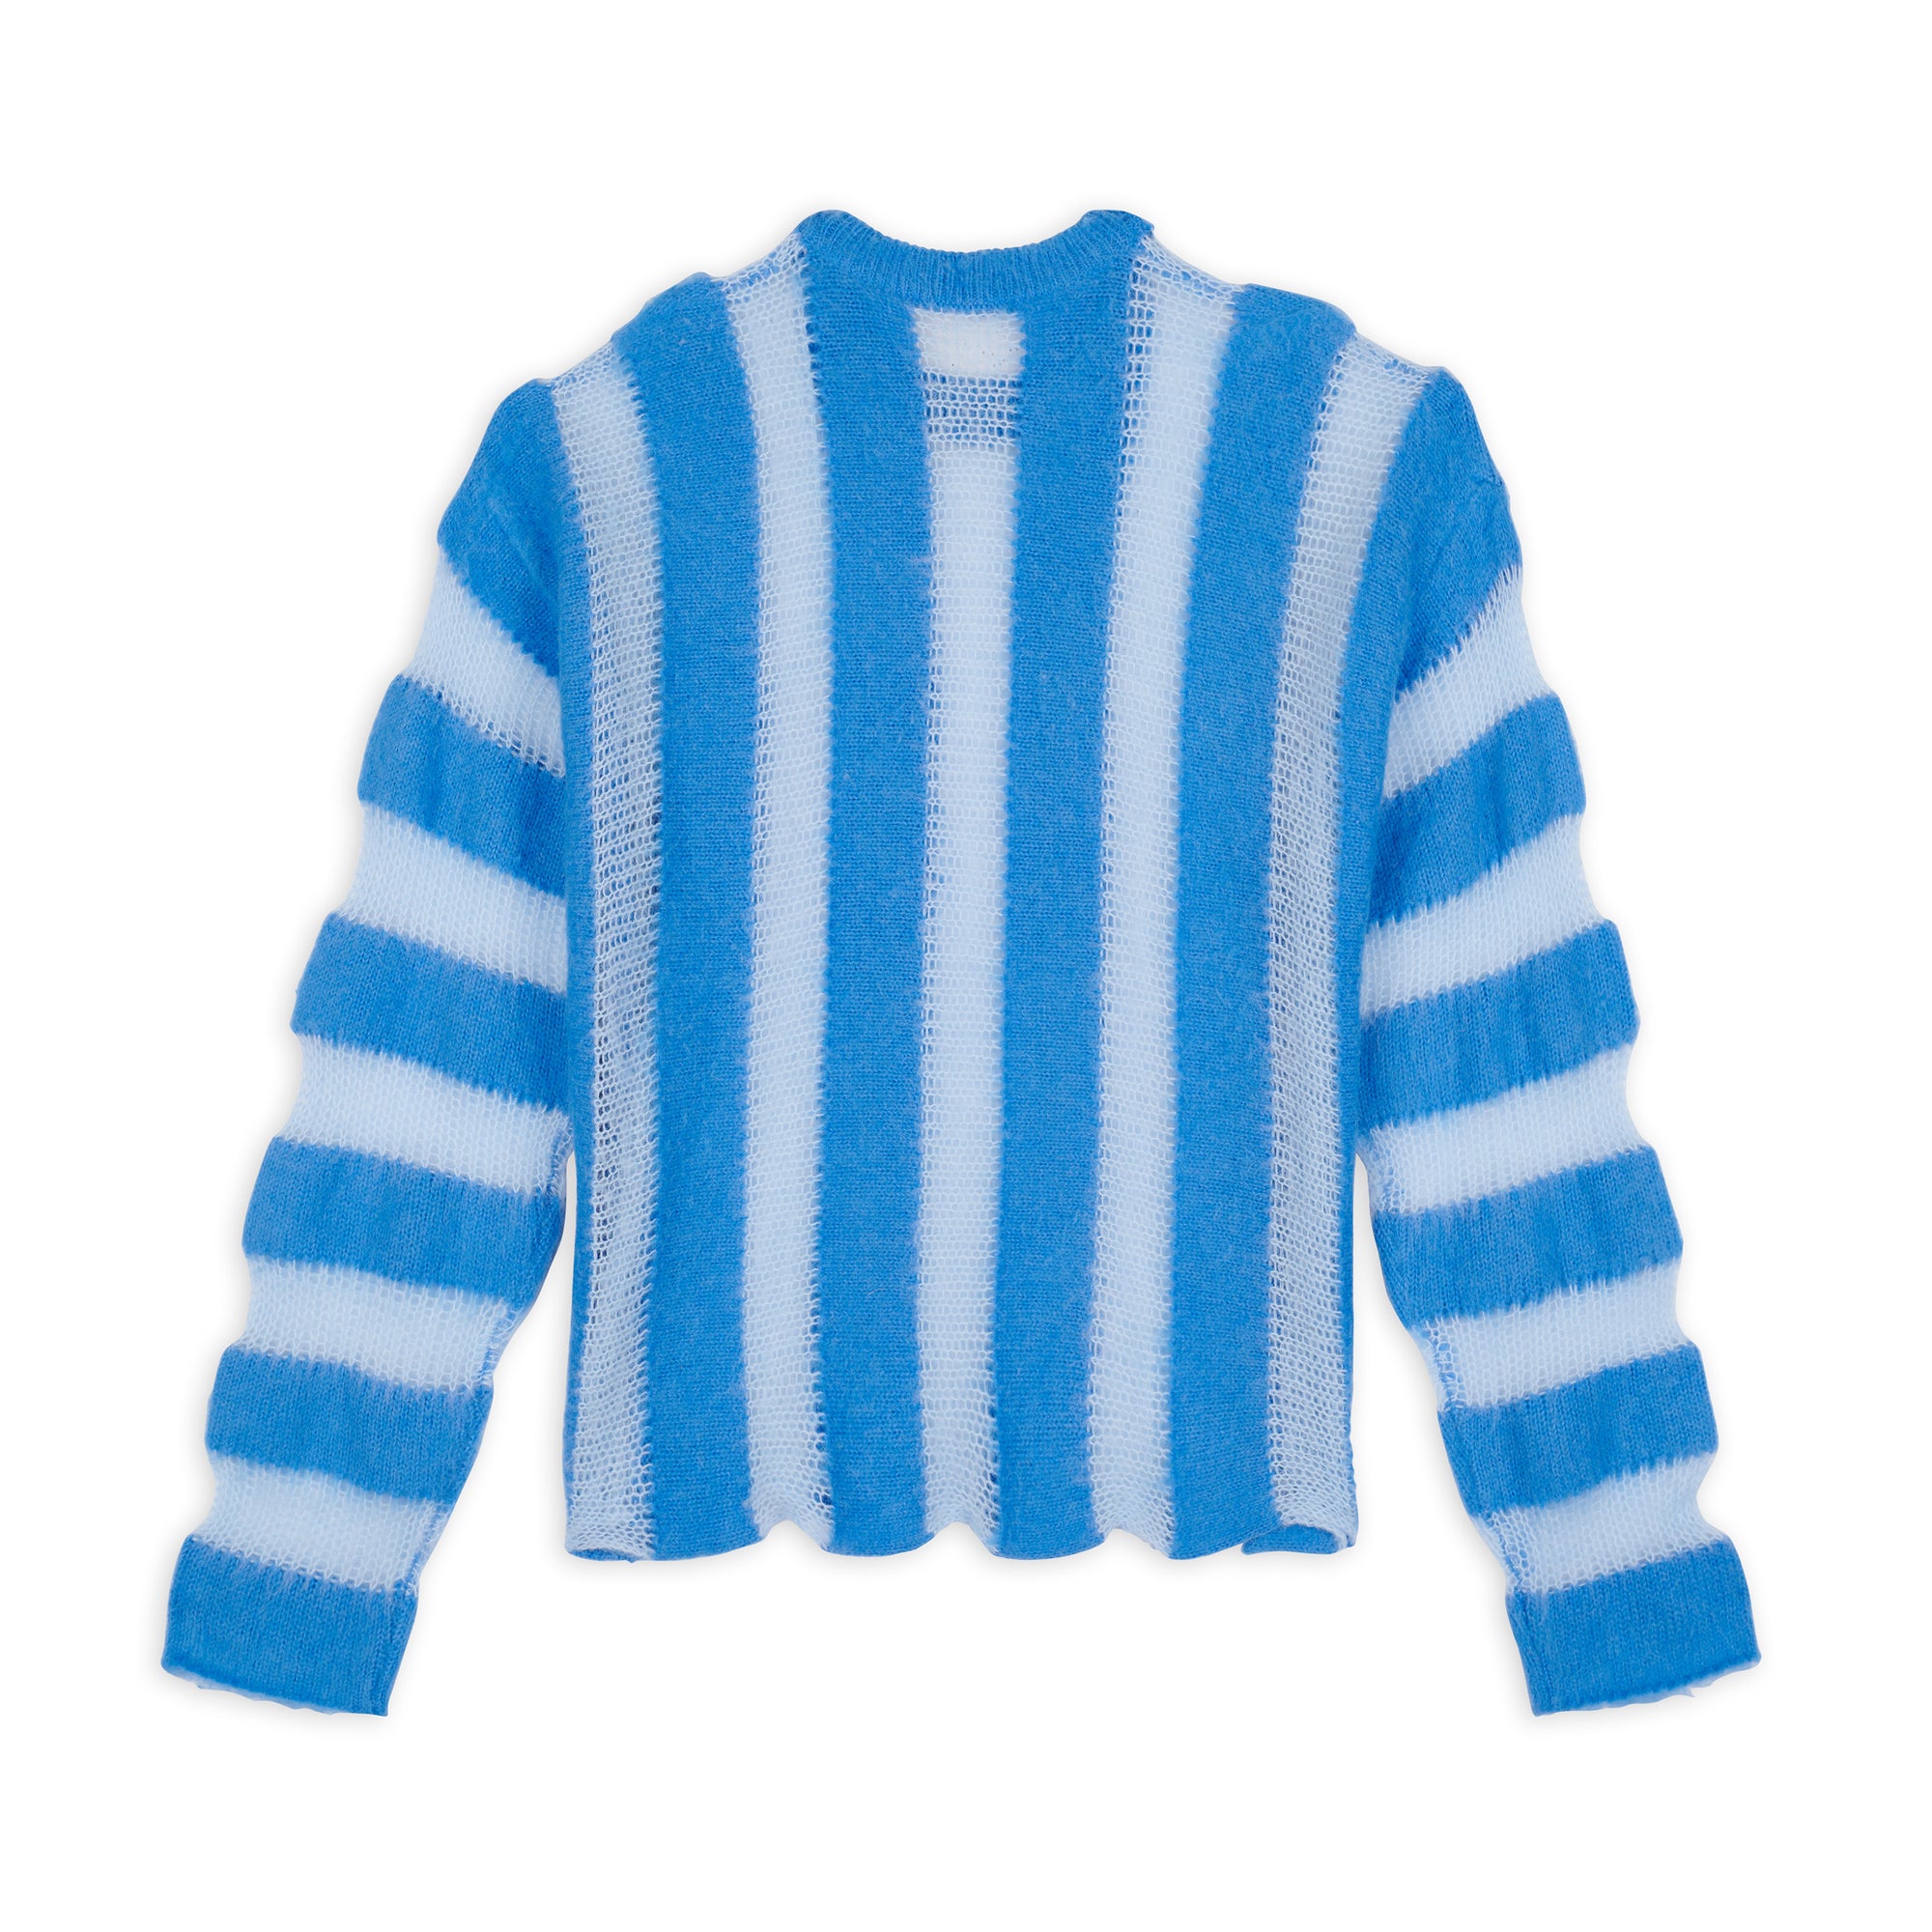 Brain Dead - Men's Fuzzy Threadbare Sweater - (Light Blue) view 2